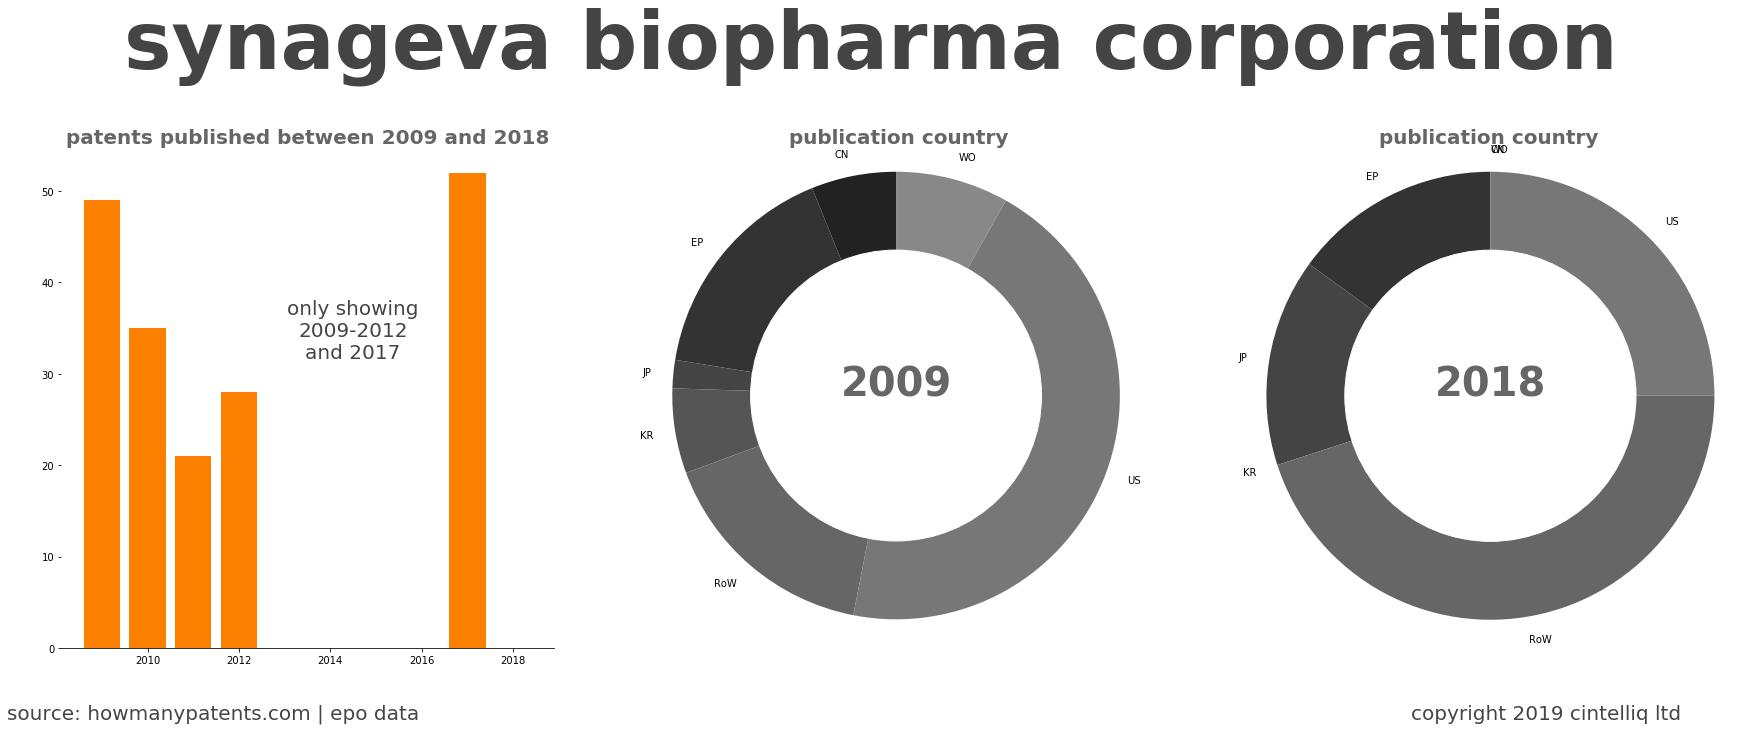 summary of patents for Synageva Biopharma Corporation